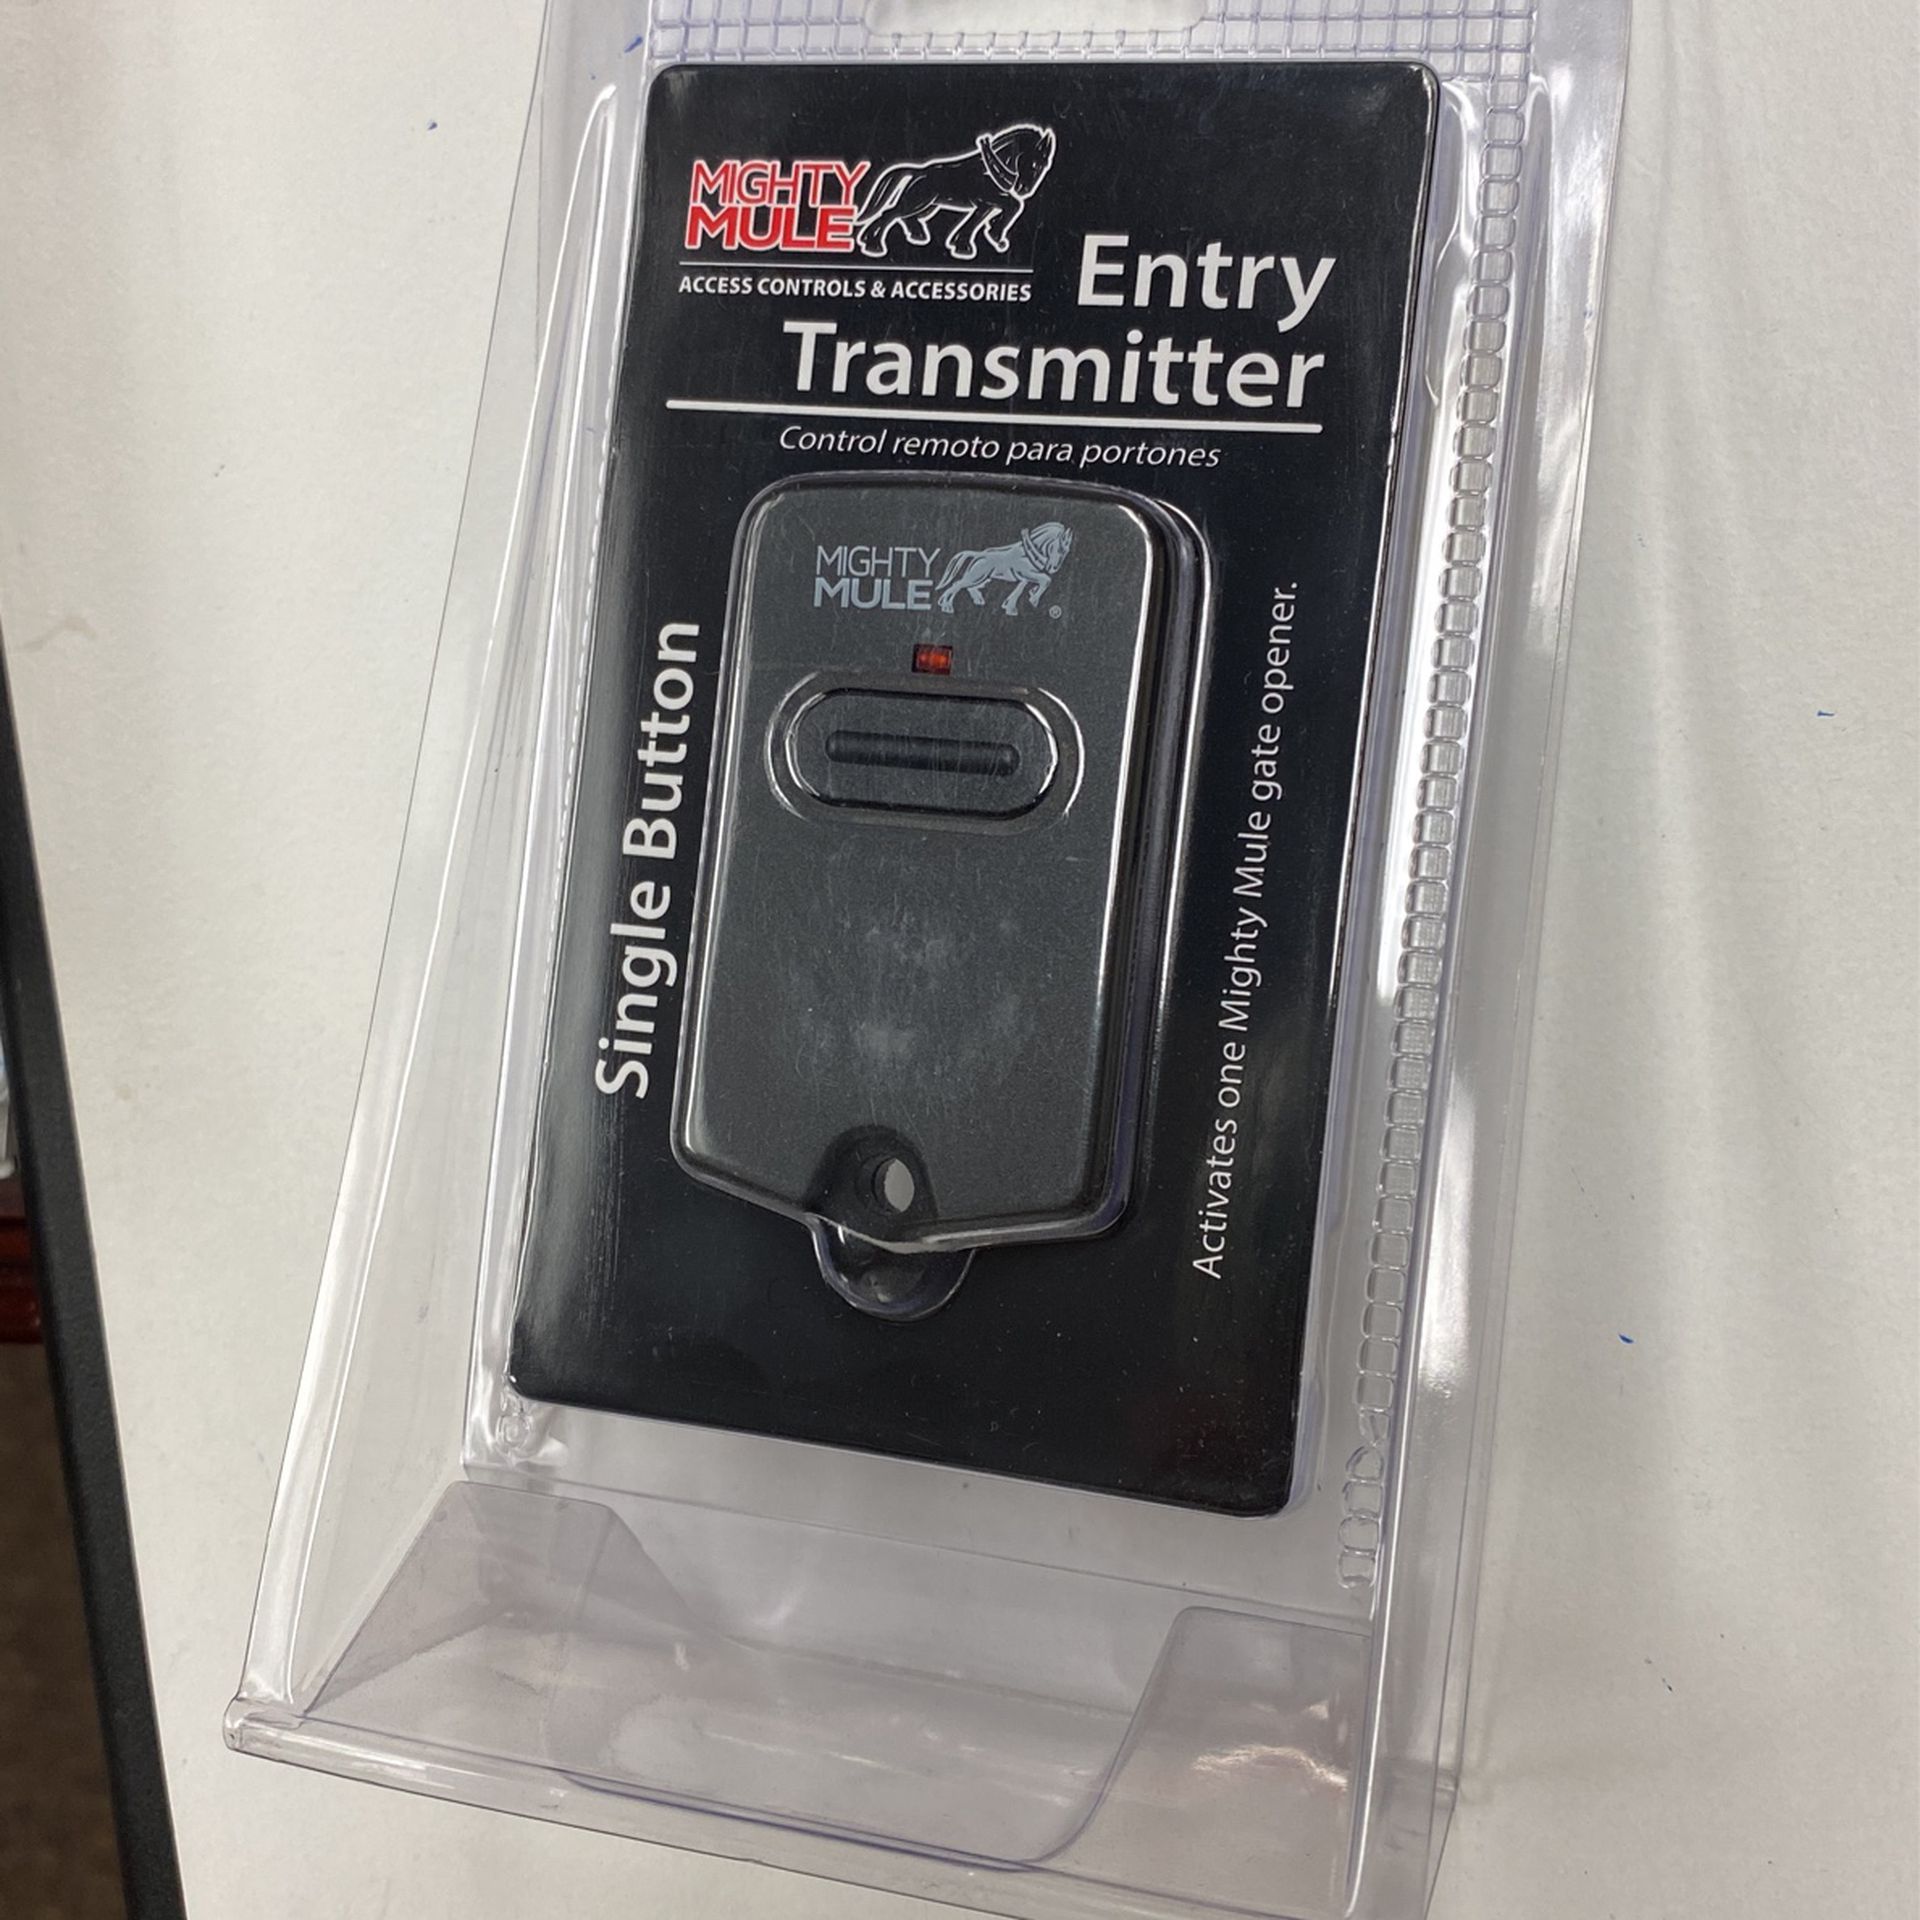 Mighty Mule Gate Transmitter Clicker 